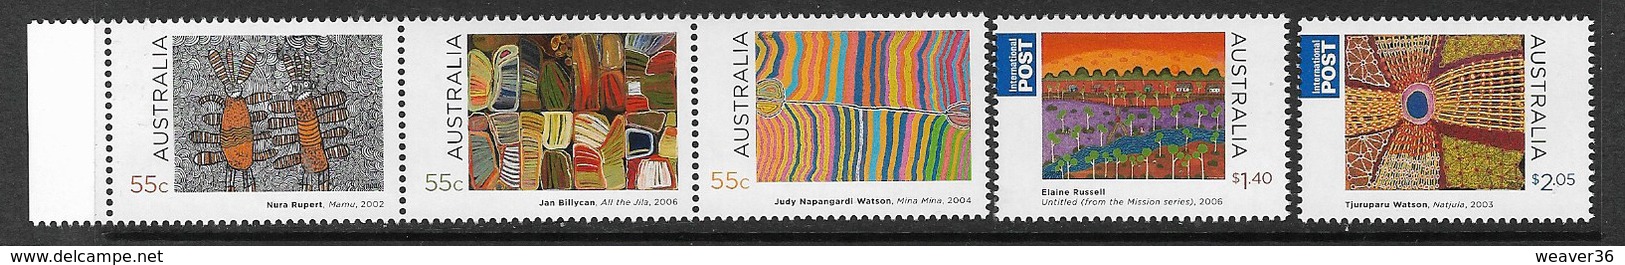 Australia SG3178-3182 2009 Indigenous Culture 5v Complete Unmounted Mint [4/4359/6D] - Mint Stamps